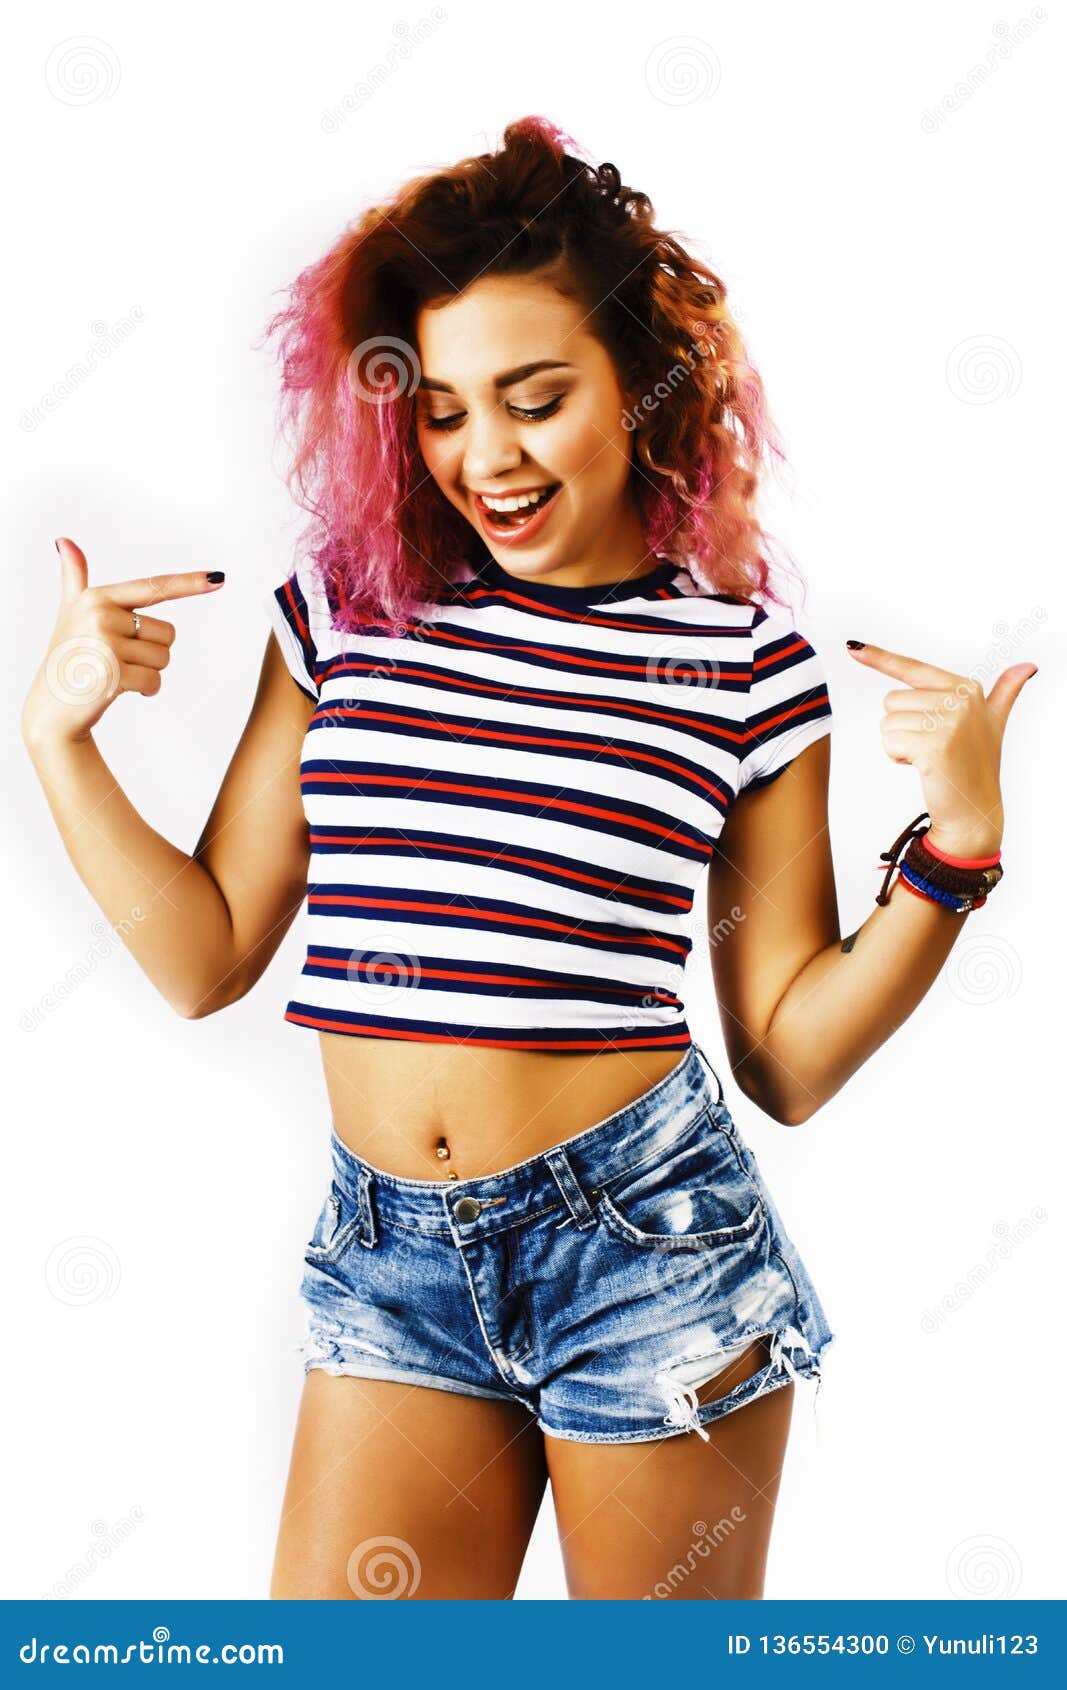 https://thumbs.dreamstime.com/z/young-happy-smiling-latin-american-teenage-girl-emotional-posing-young-happy-smiling-latin-american-teenage-girl-emotional-posing-136554300.jpg